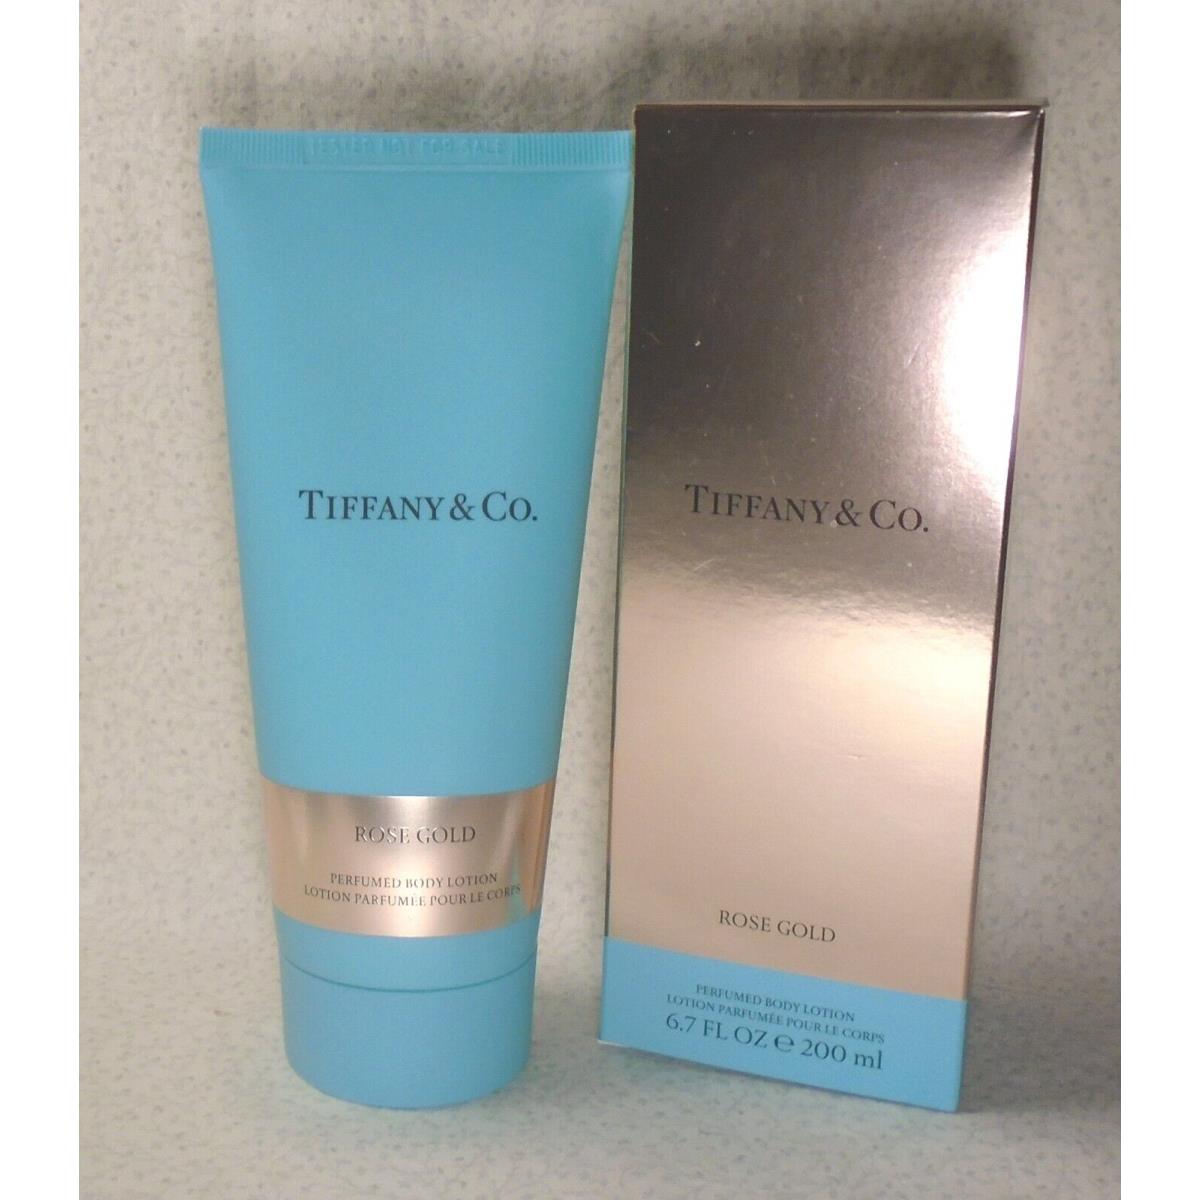 Tiffany Co. Rose Gold Perfumed Body Lotion 6.7oz. - Boxed